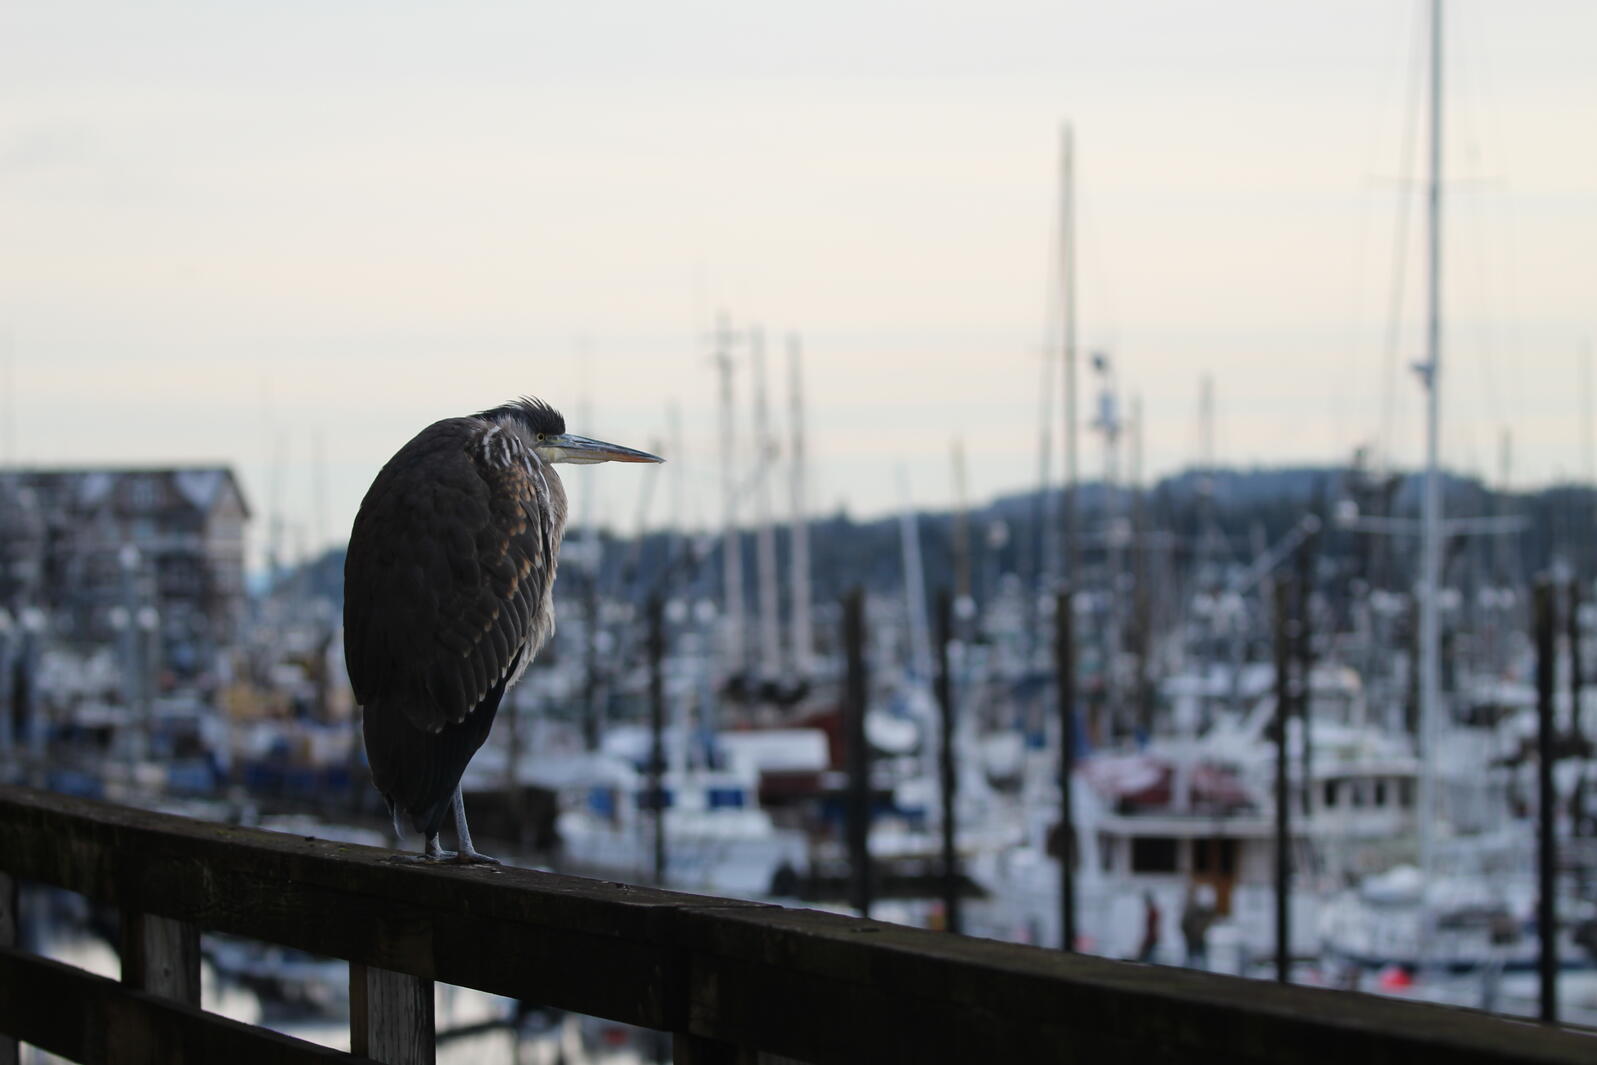 Large bird overlooking boat harbor